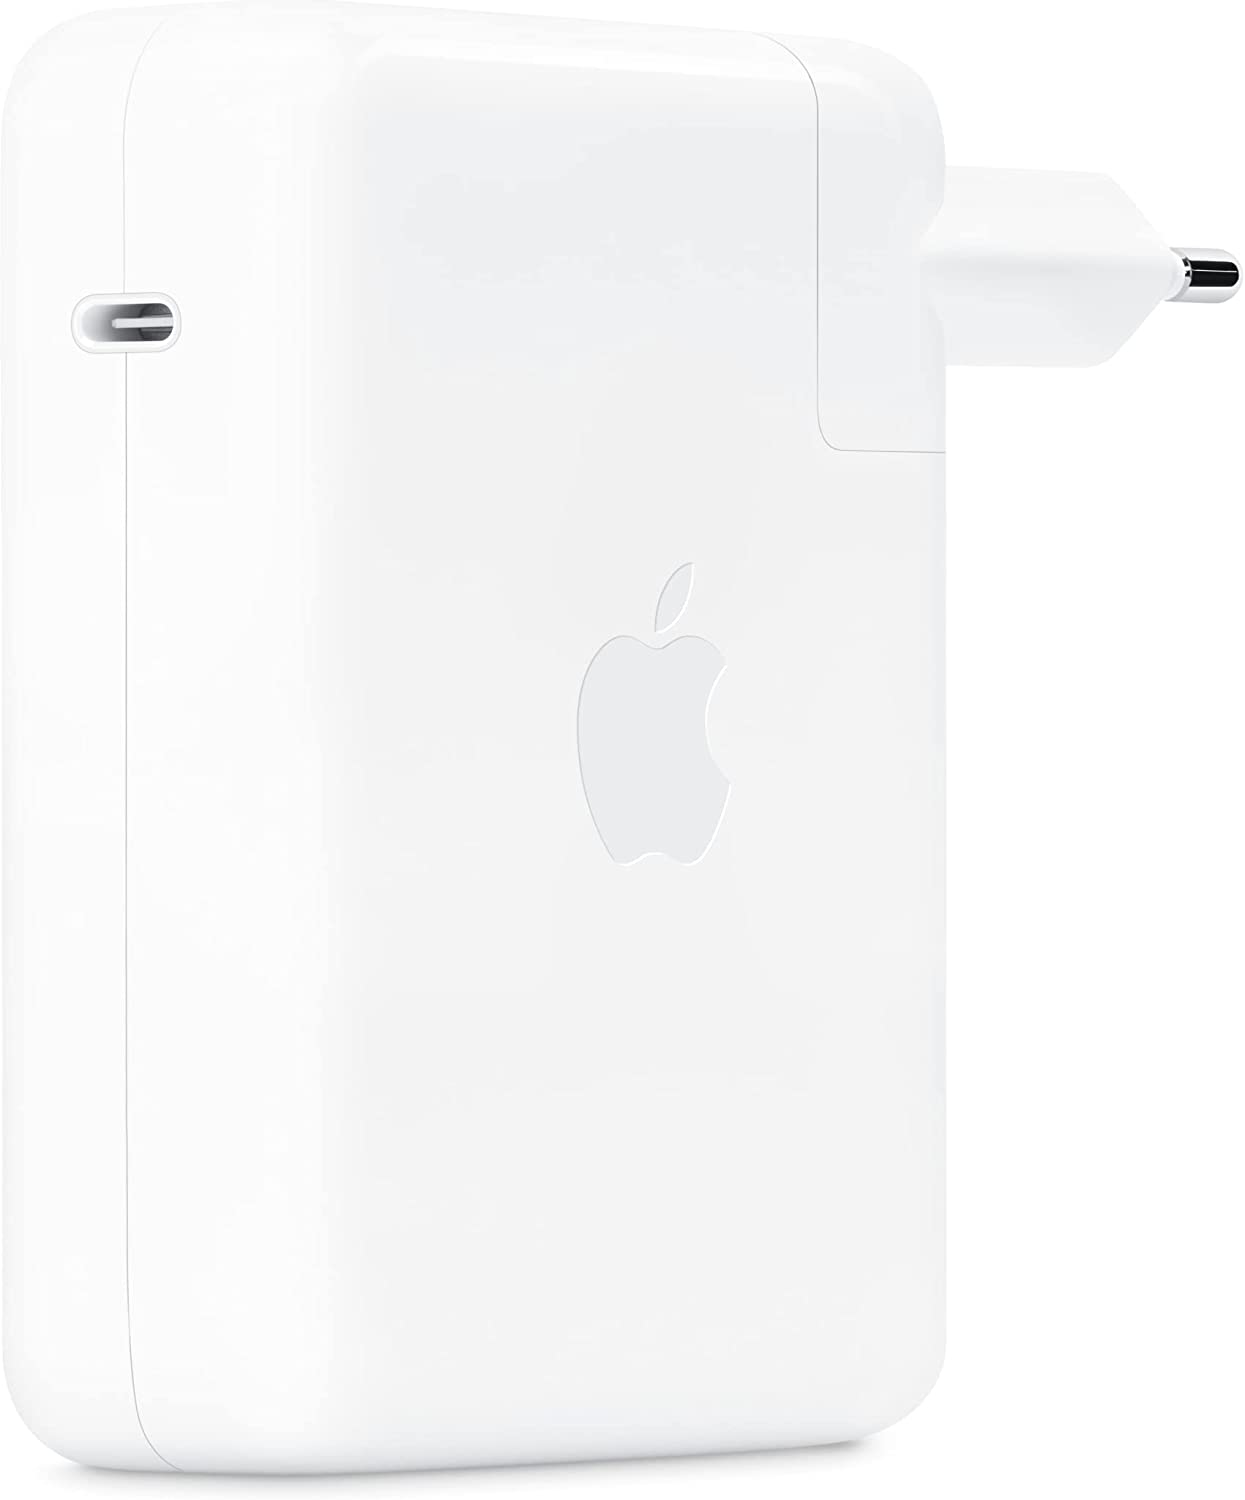 Apple 140W USB-C Power Adapter – Bestes universelles Wandladegerät für Macbook Pro 16 Zoll